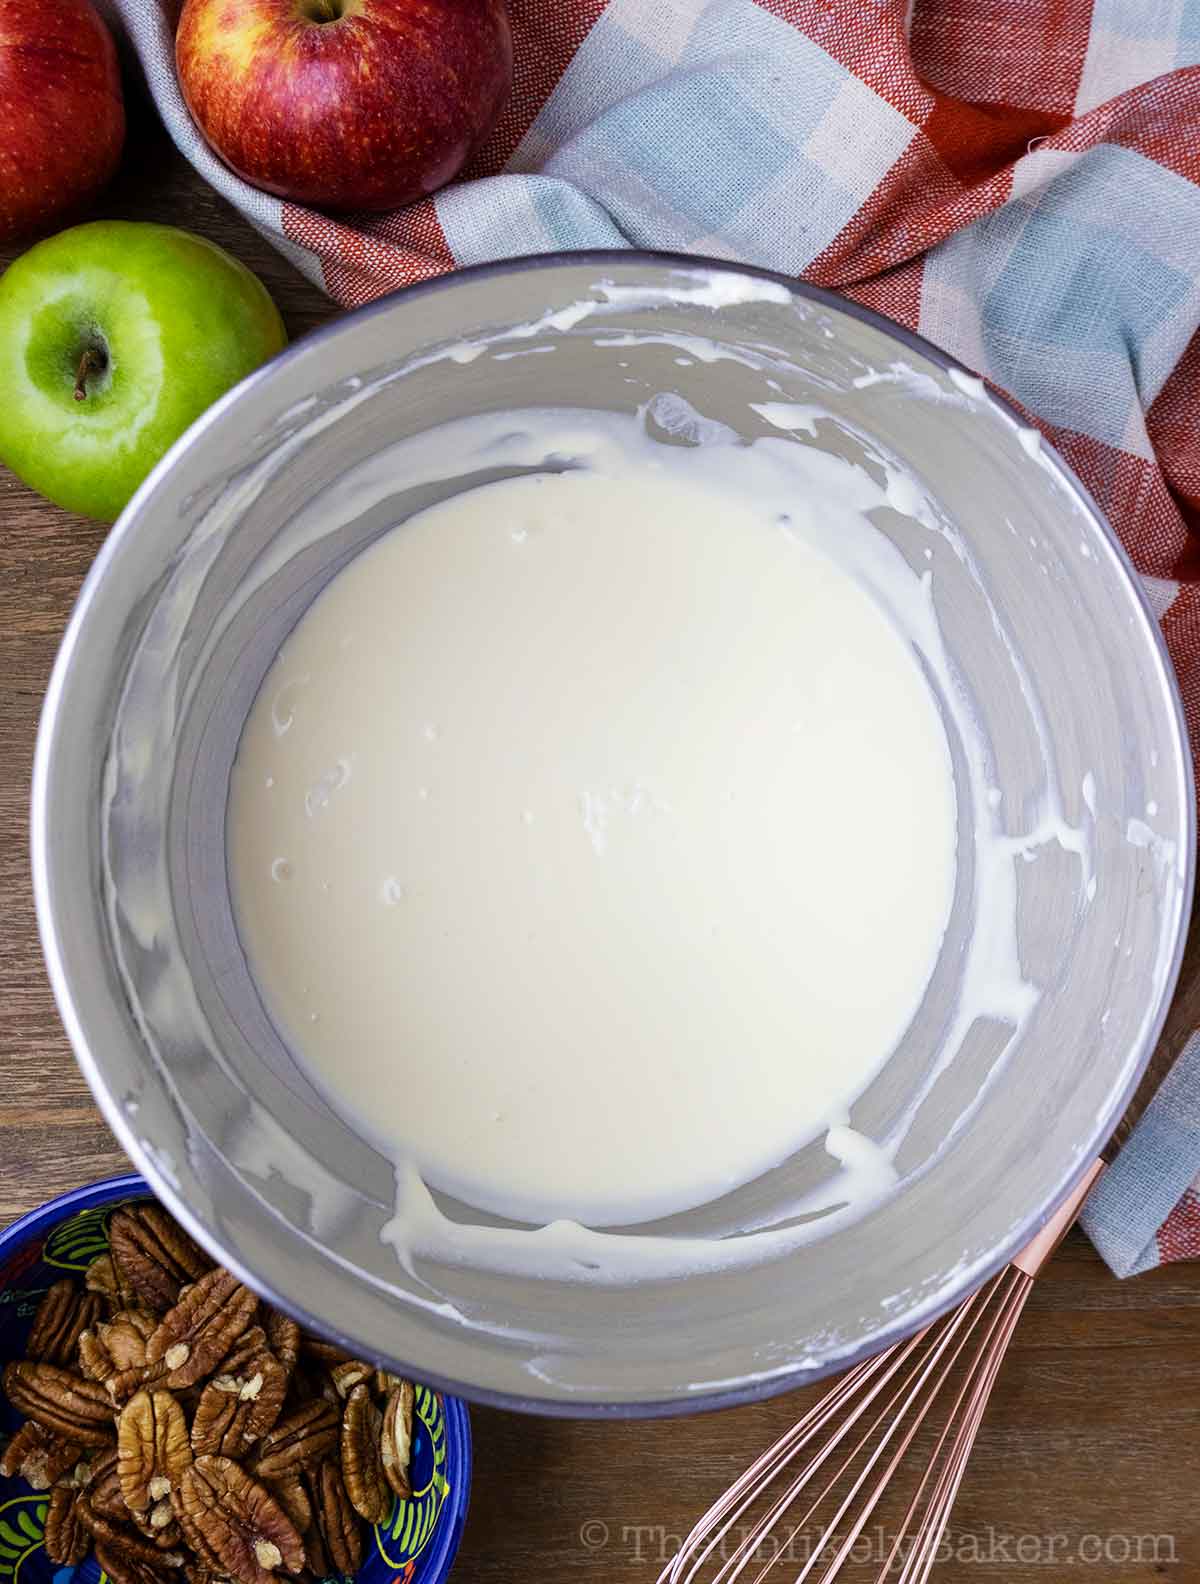 Cream cheese mixture in a bowl.